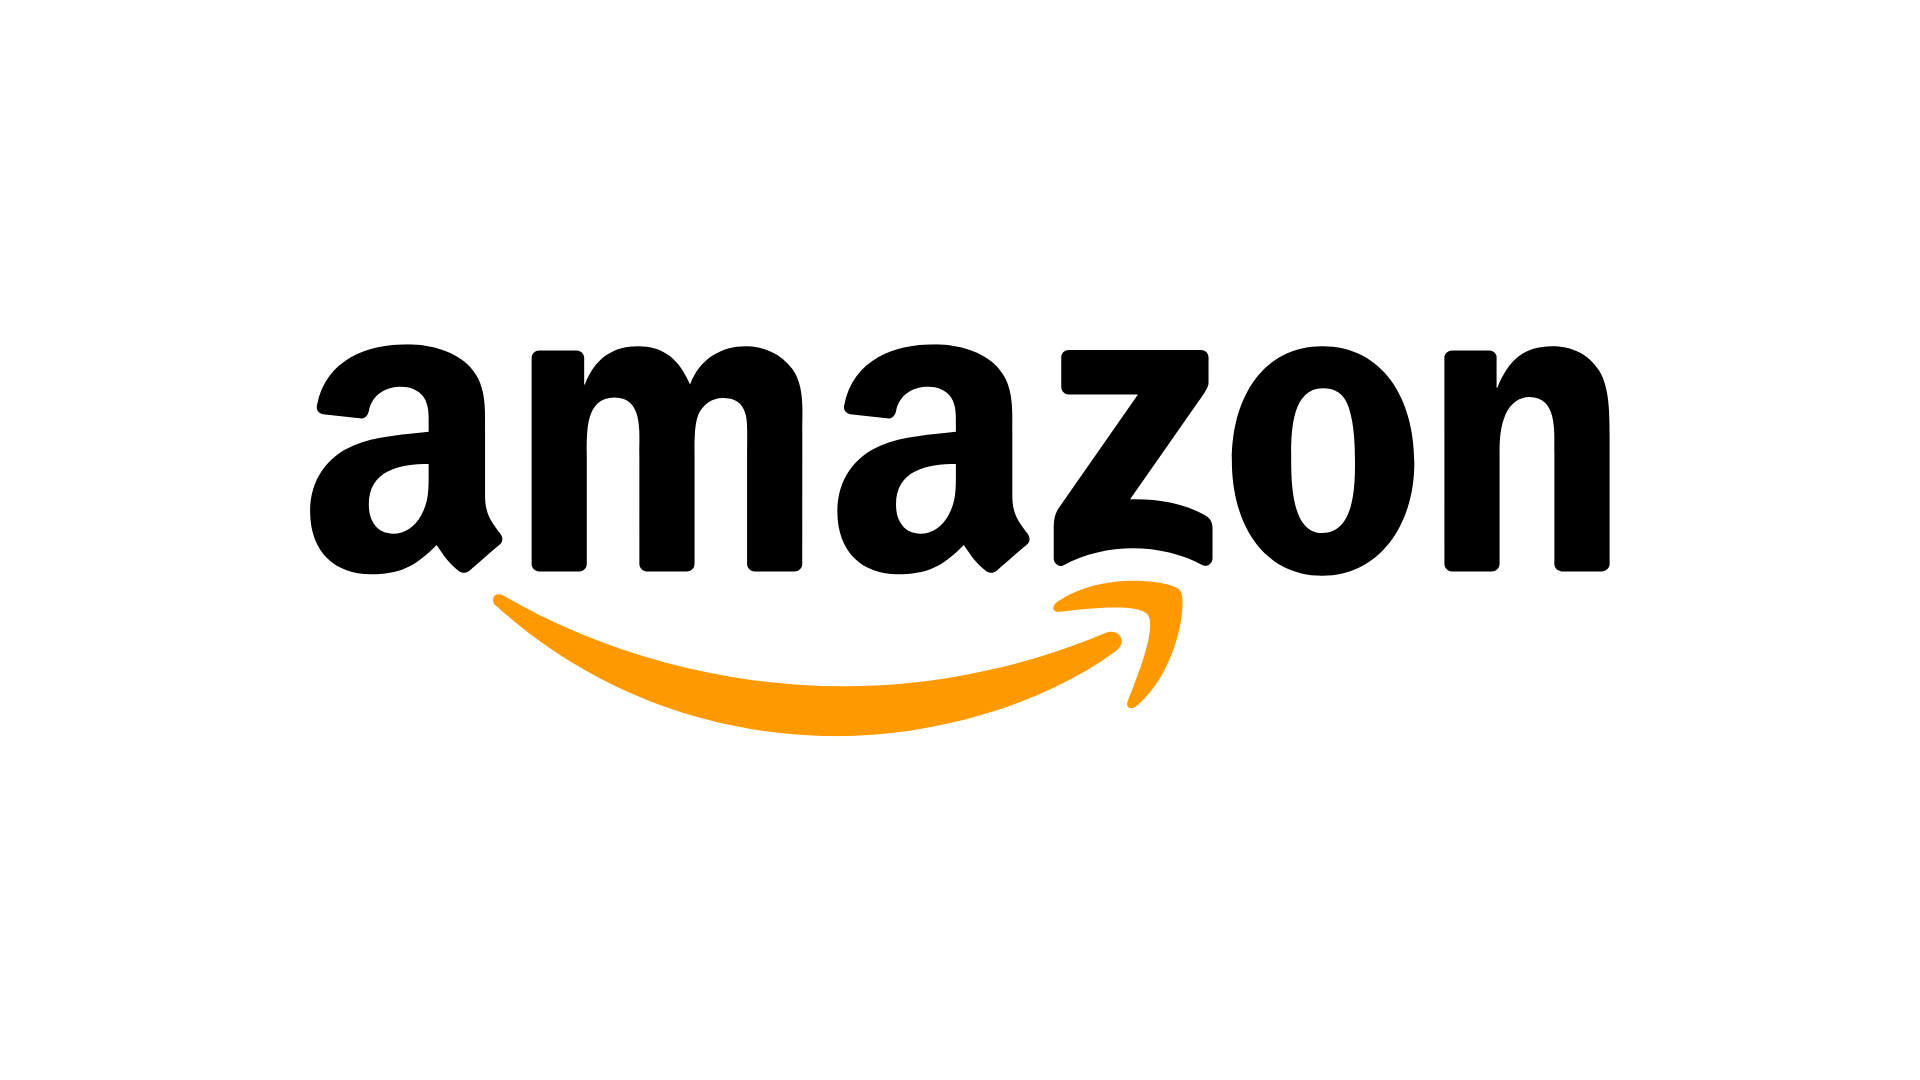 the amazon logo is black and orange with an orange arrow .